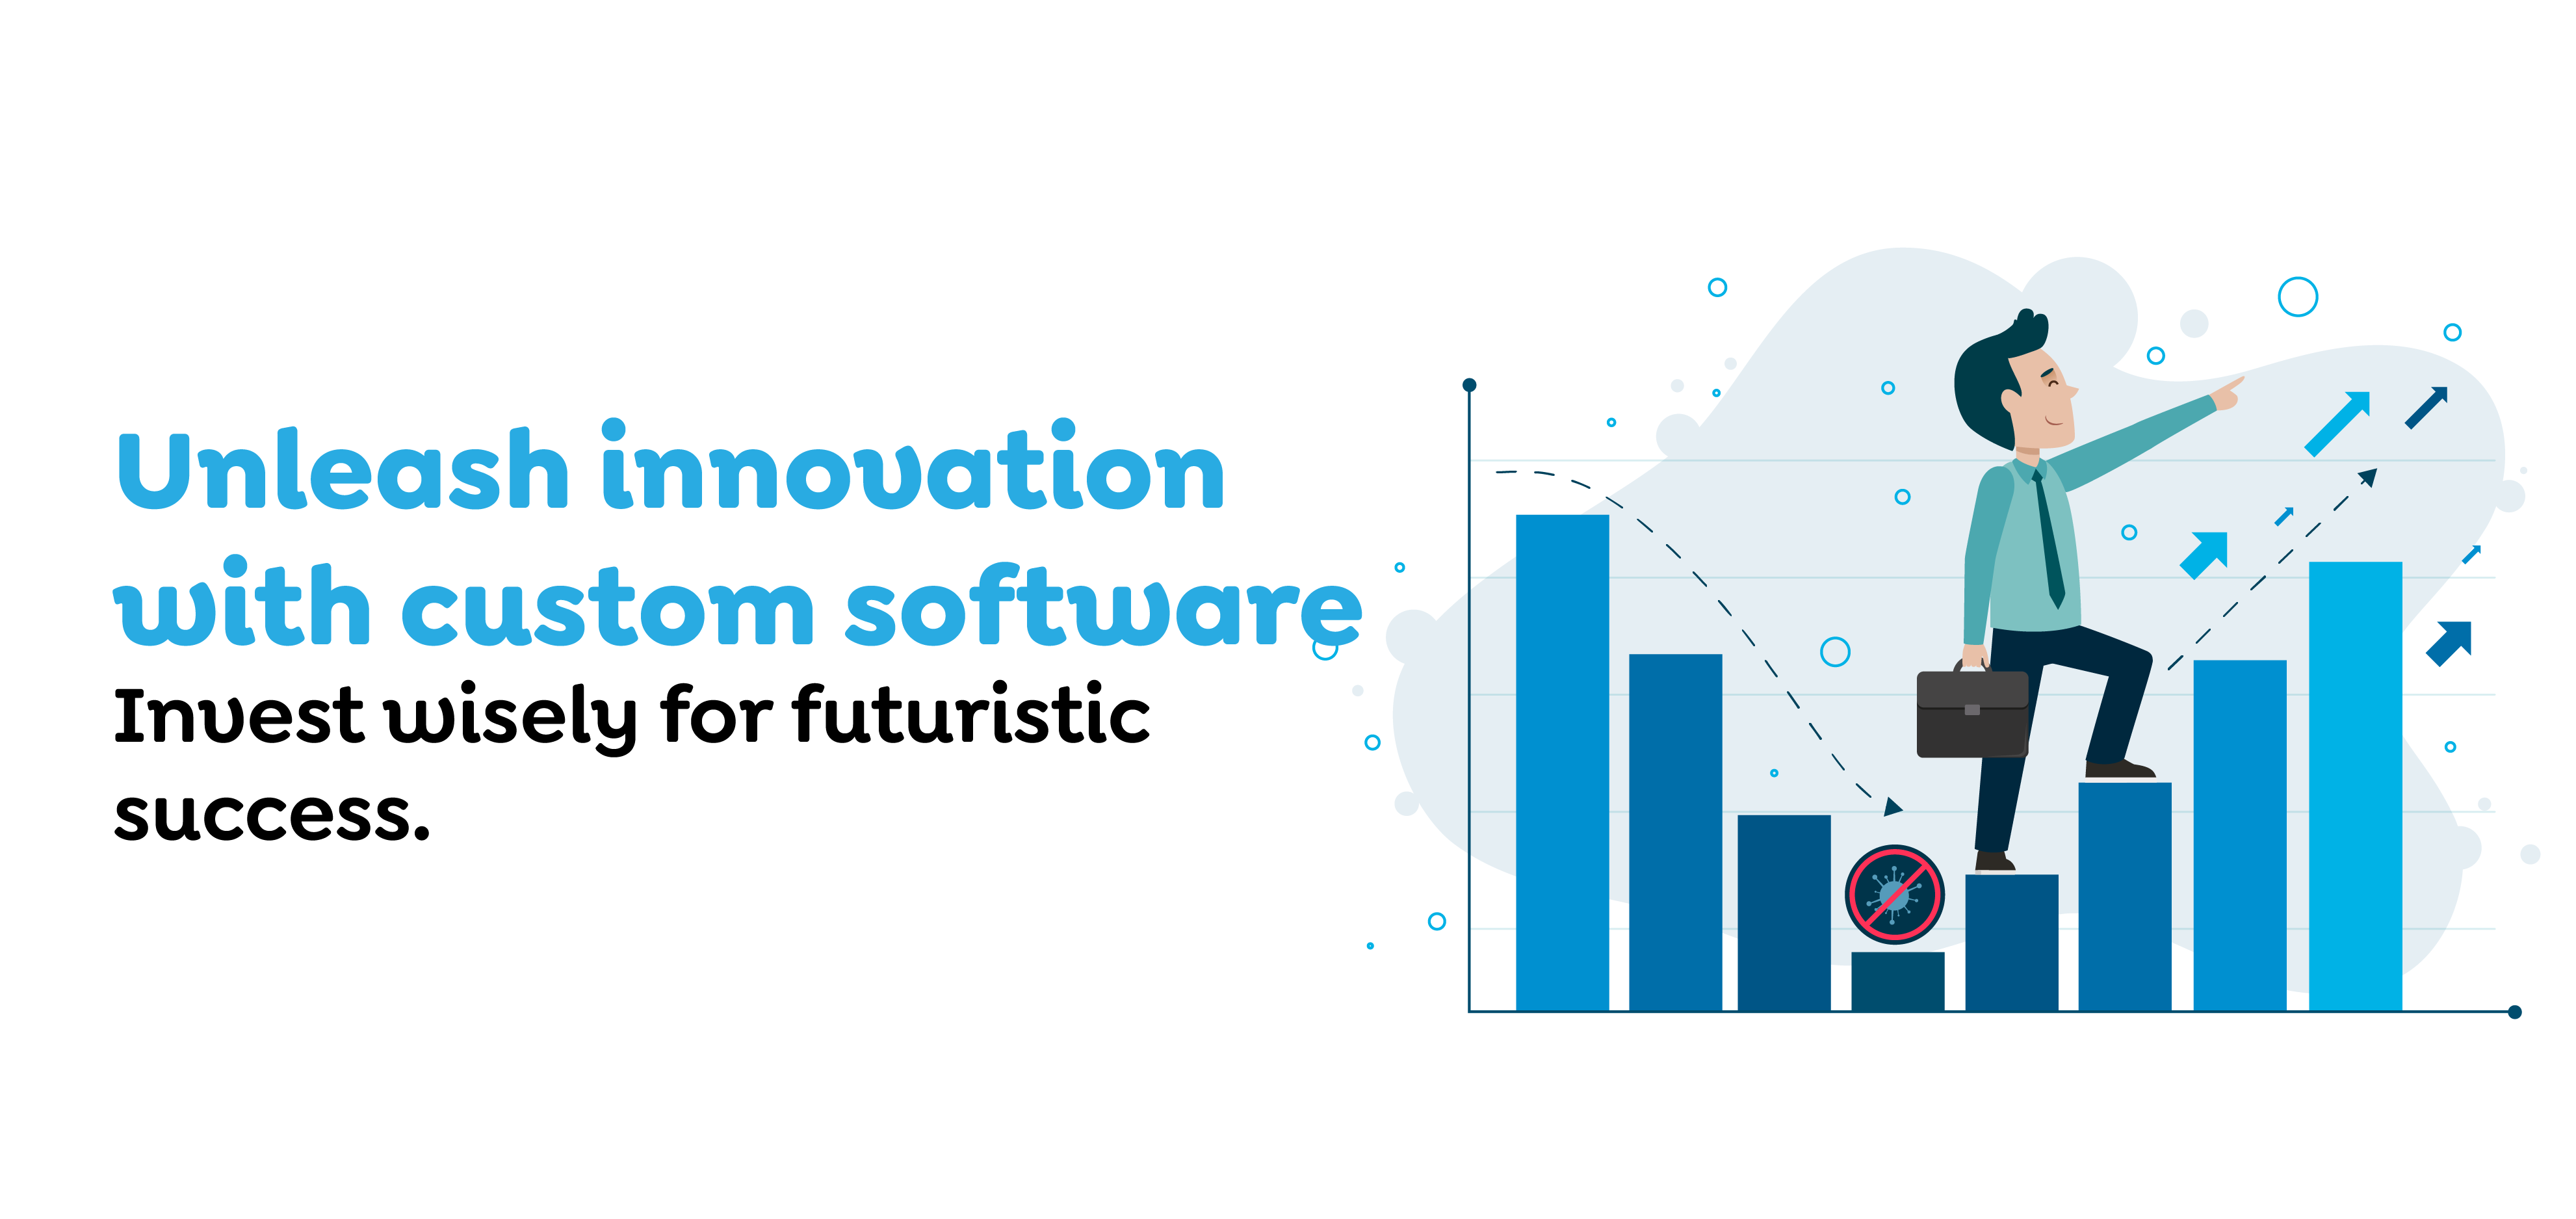 Unleash innovation with custom software